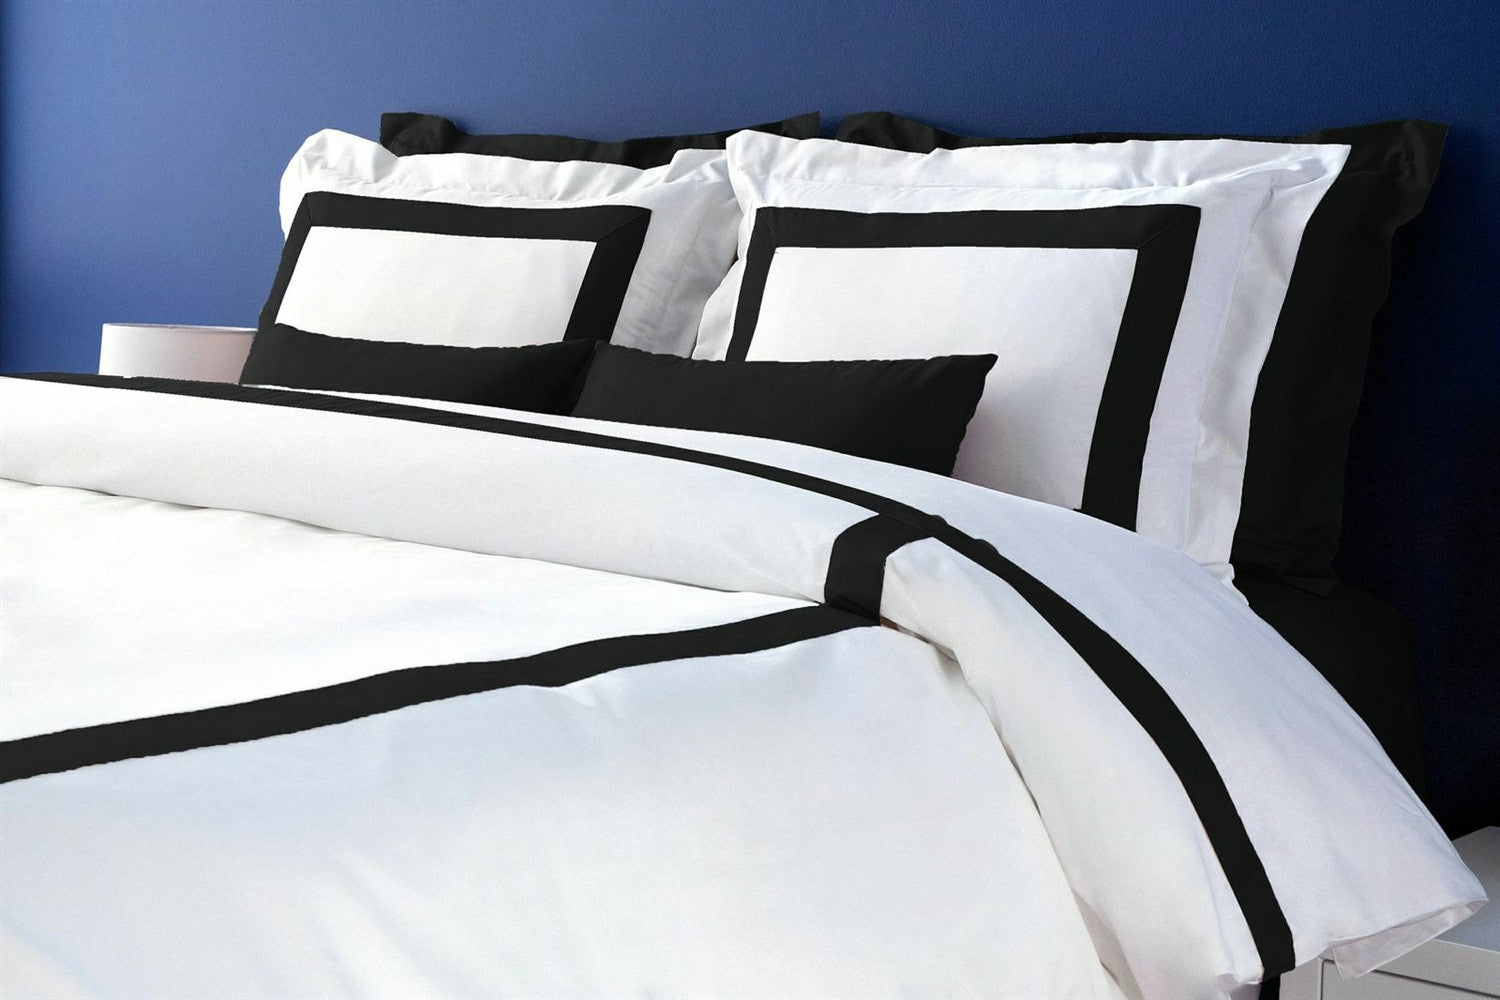 Chanel Black With White Border Basic Bedding Set - Tagotee